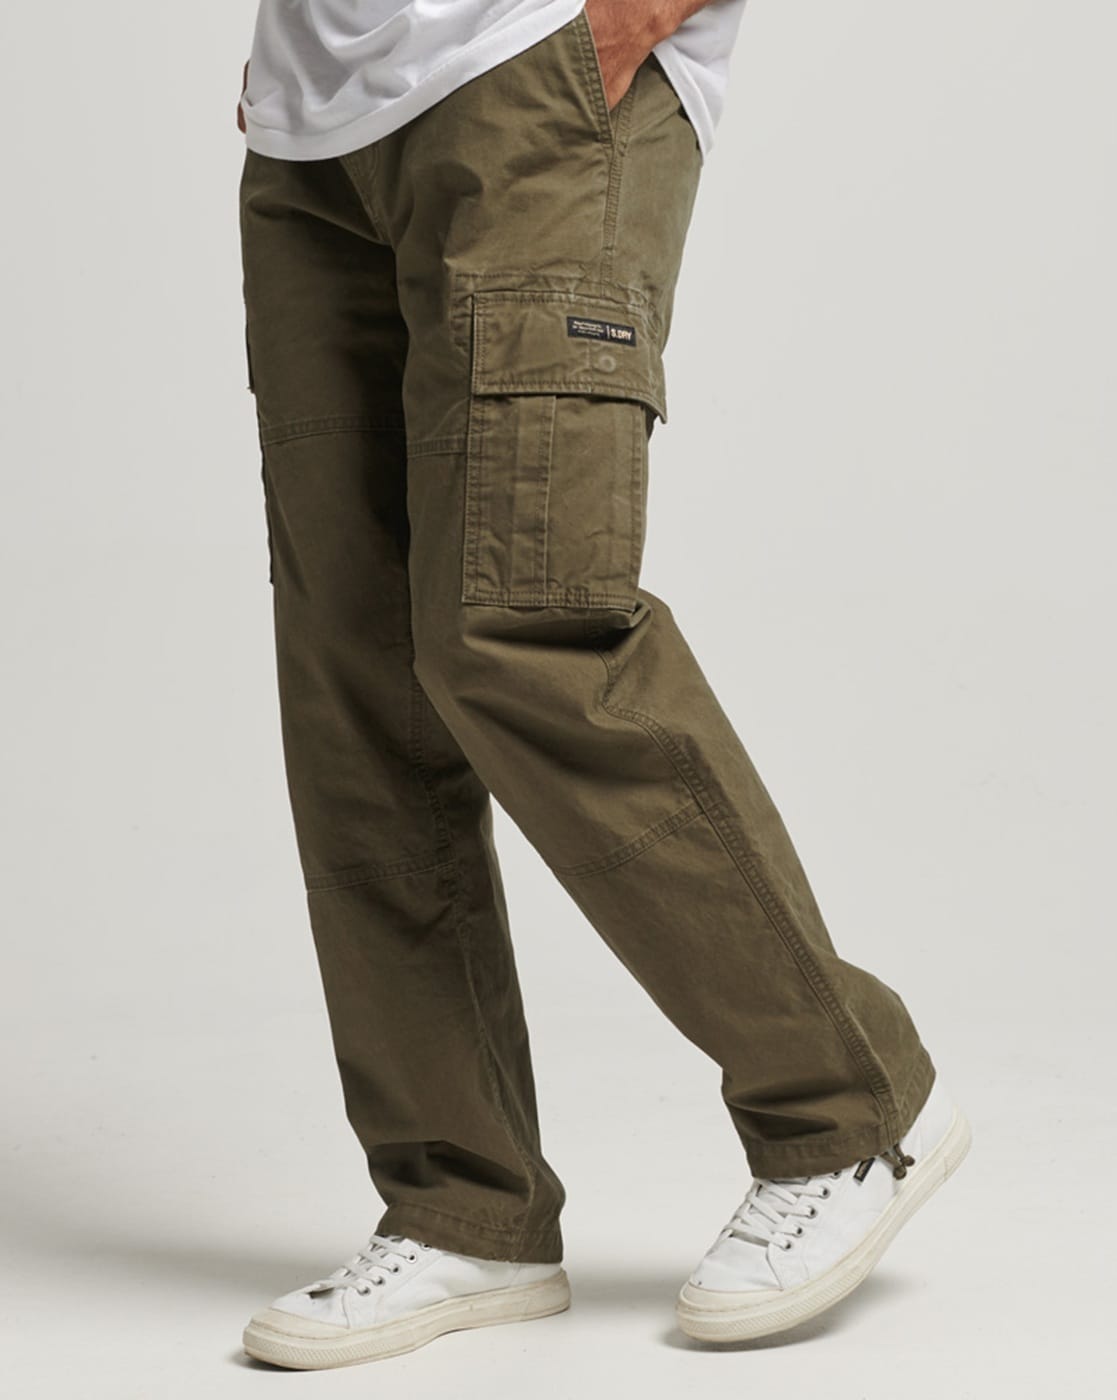 Men's Premium Baggy Cargo Jeans Pants Khaki | Cargo jeans pant, Cargo jeans,  Jeans pants